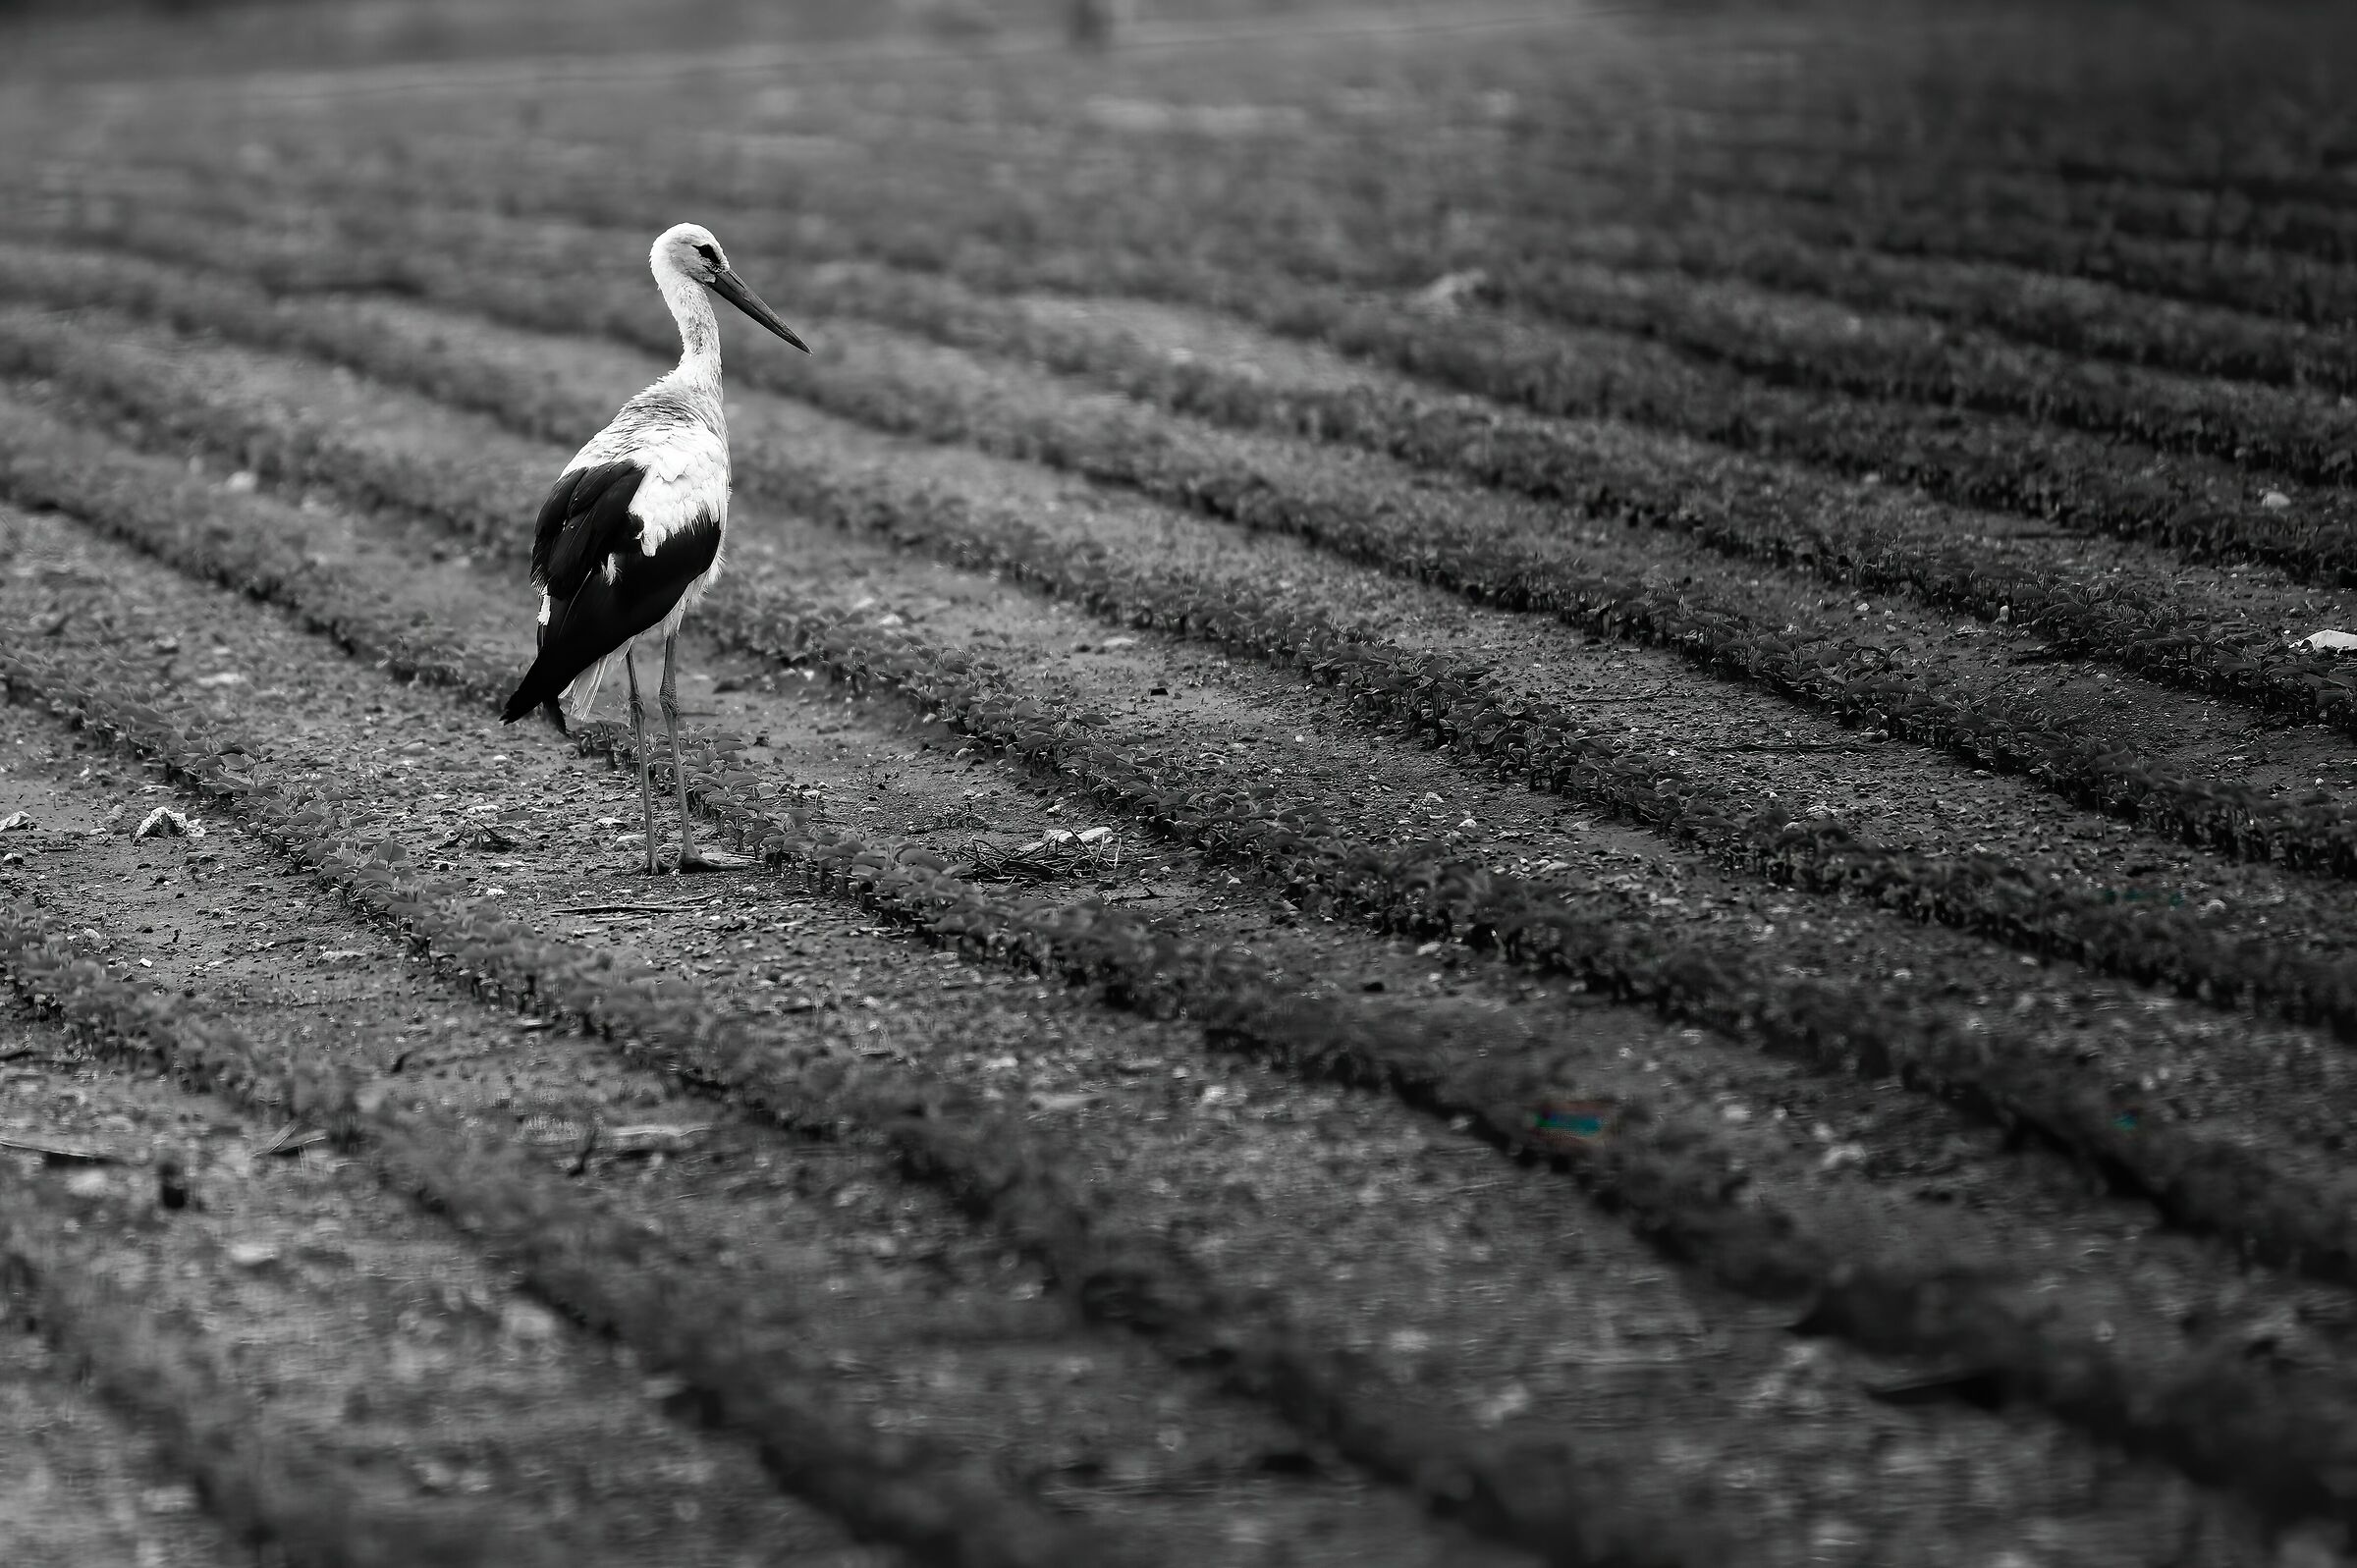 Stork in the field...